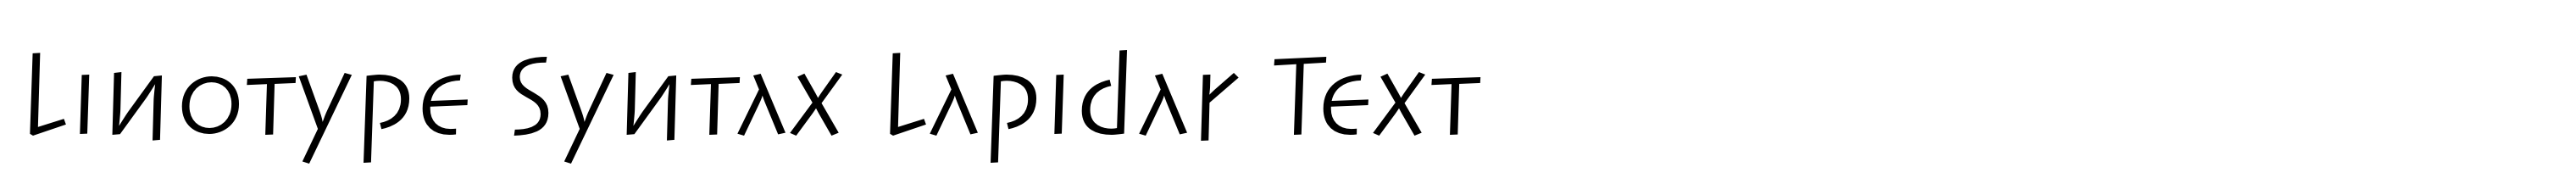 Linotype Syntax Lapidar Text